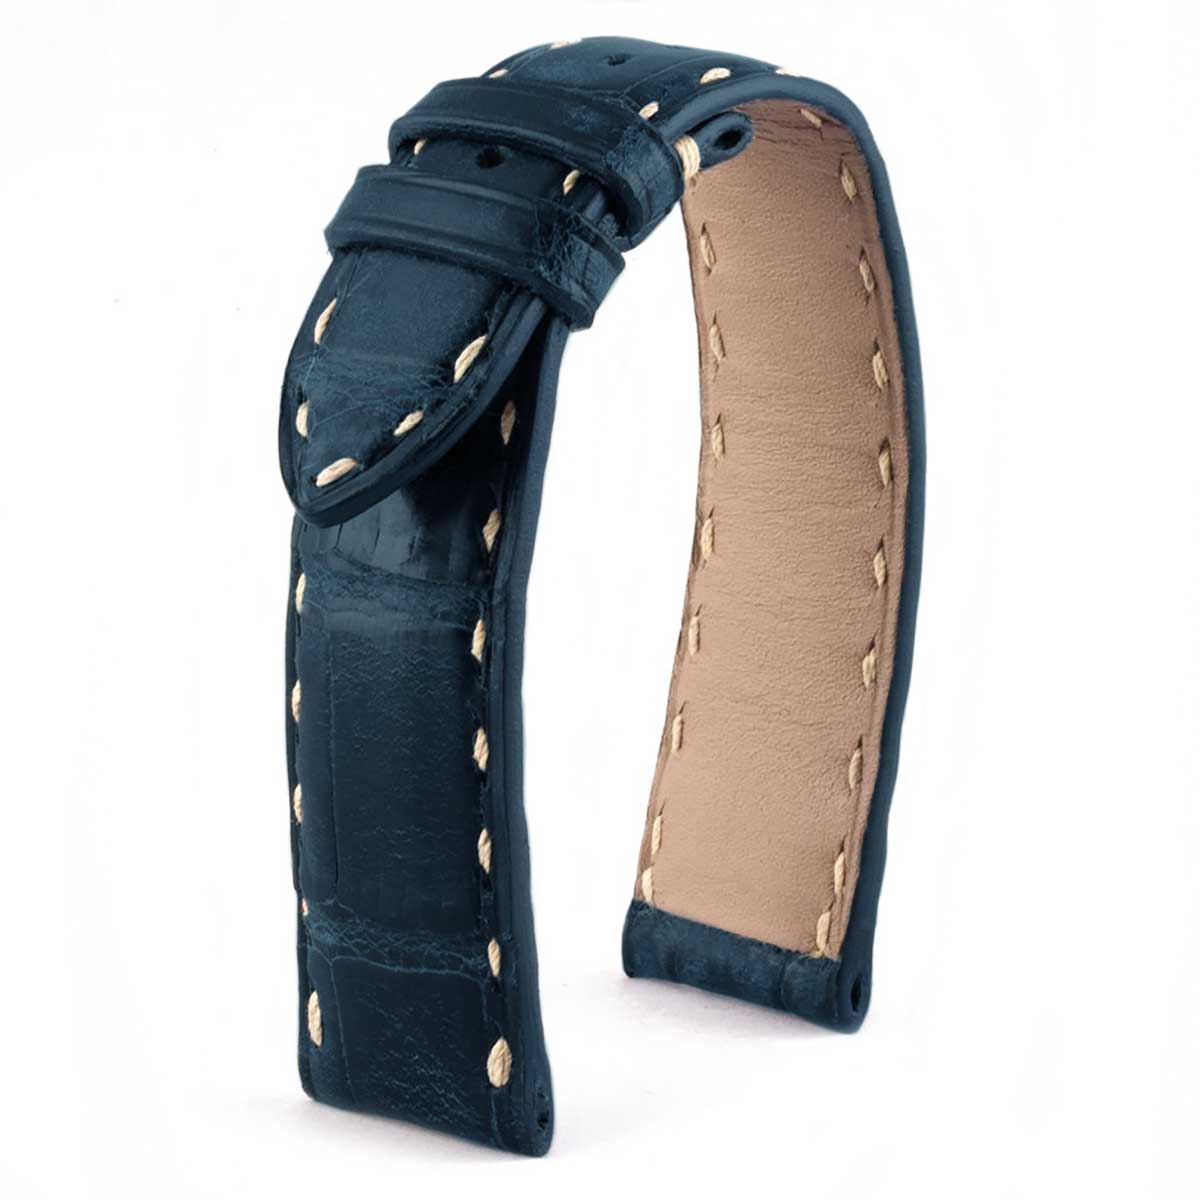 Omega Constellation Globemaster - Bracelet montre cuir - Alligator tannage spécial bleu marine waxé - watch band leather strap - ABP Concept -